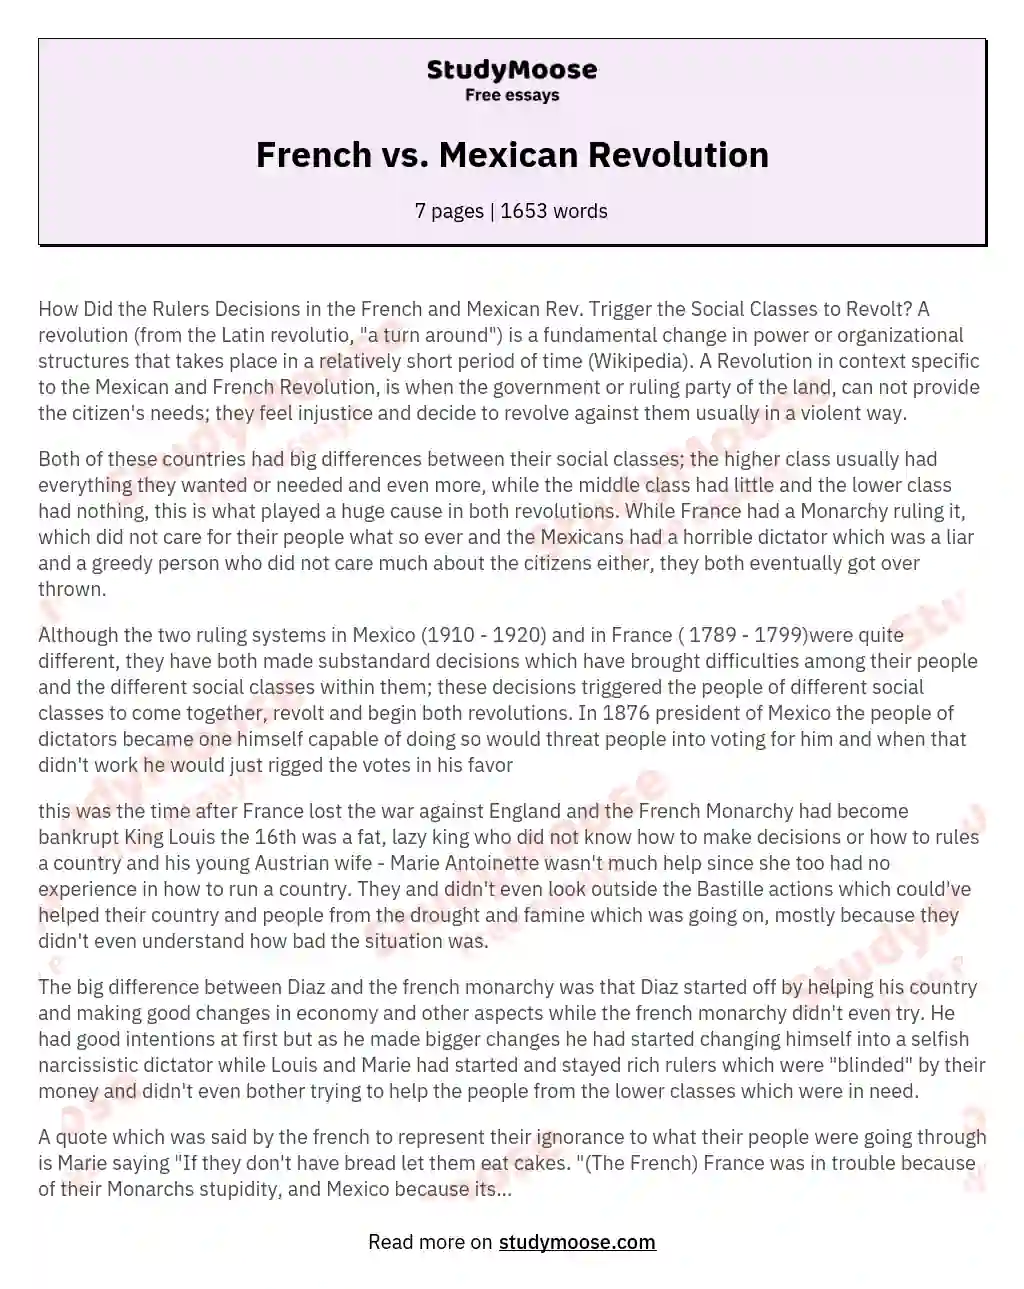 French vs. Mexican Revolution essay